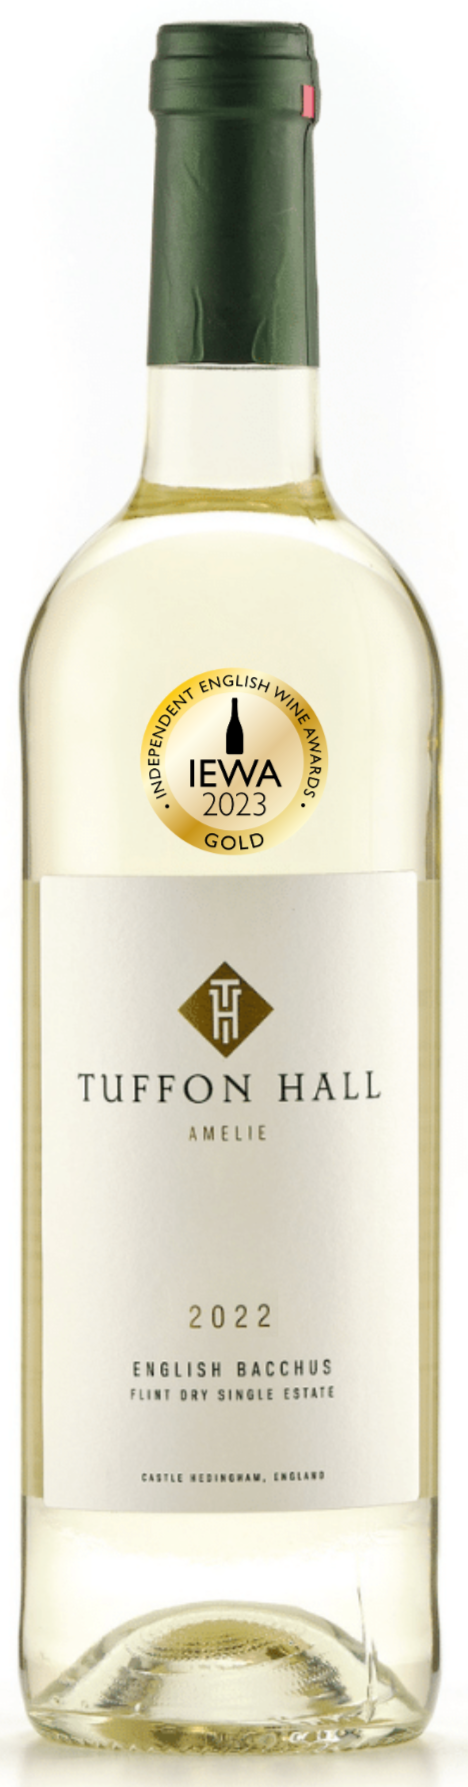 Tuffon Hall Bacchus 2022 - Hawkins Bros Fine English Wines